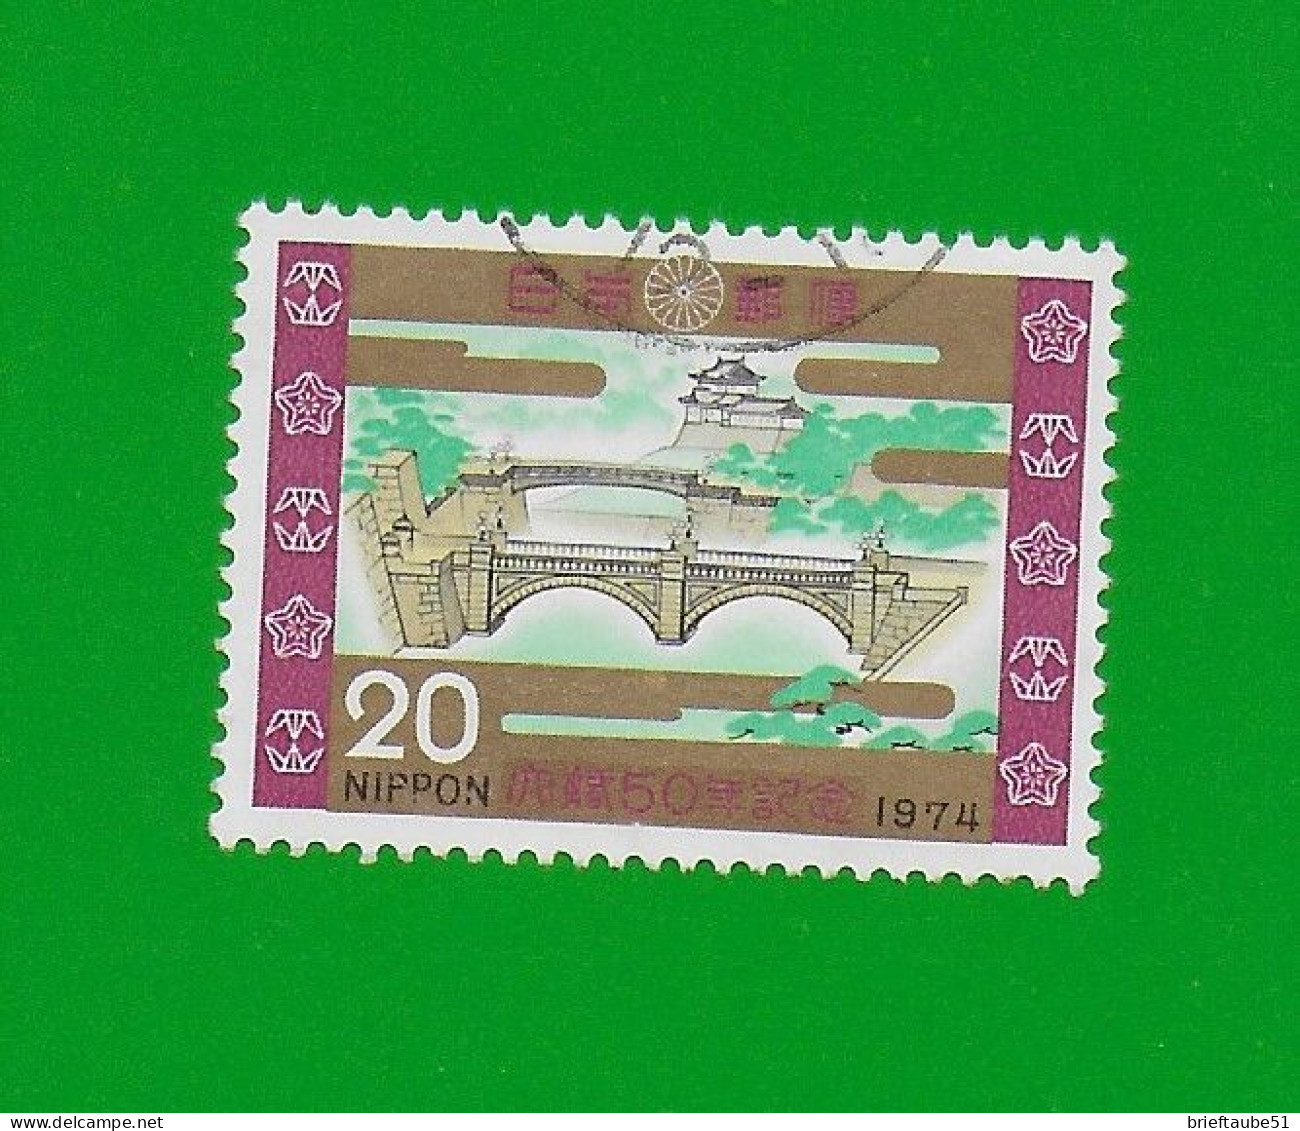 JAPAN 1974  Gestempelt°used/Bedarf  # Michel-Nr. 1197 01  #  KAISERPALAST - Oblitérés